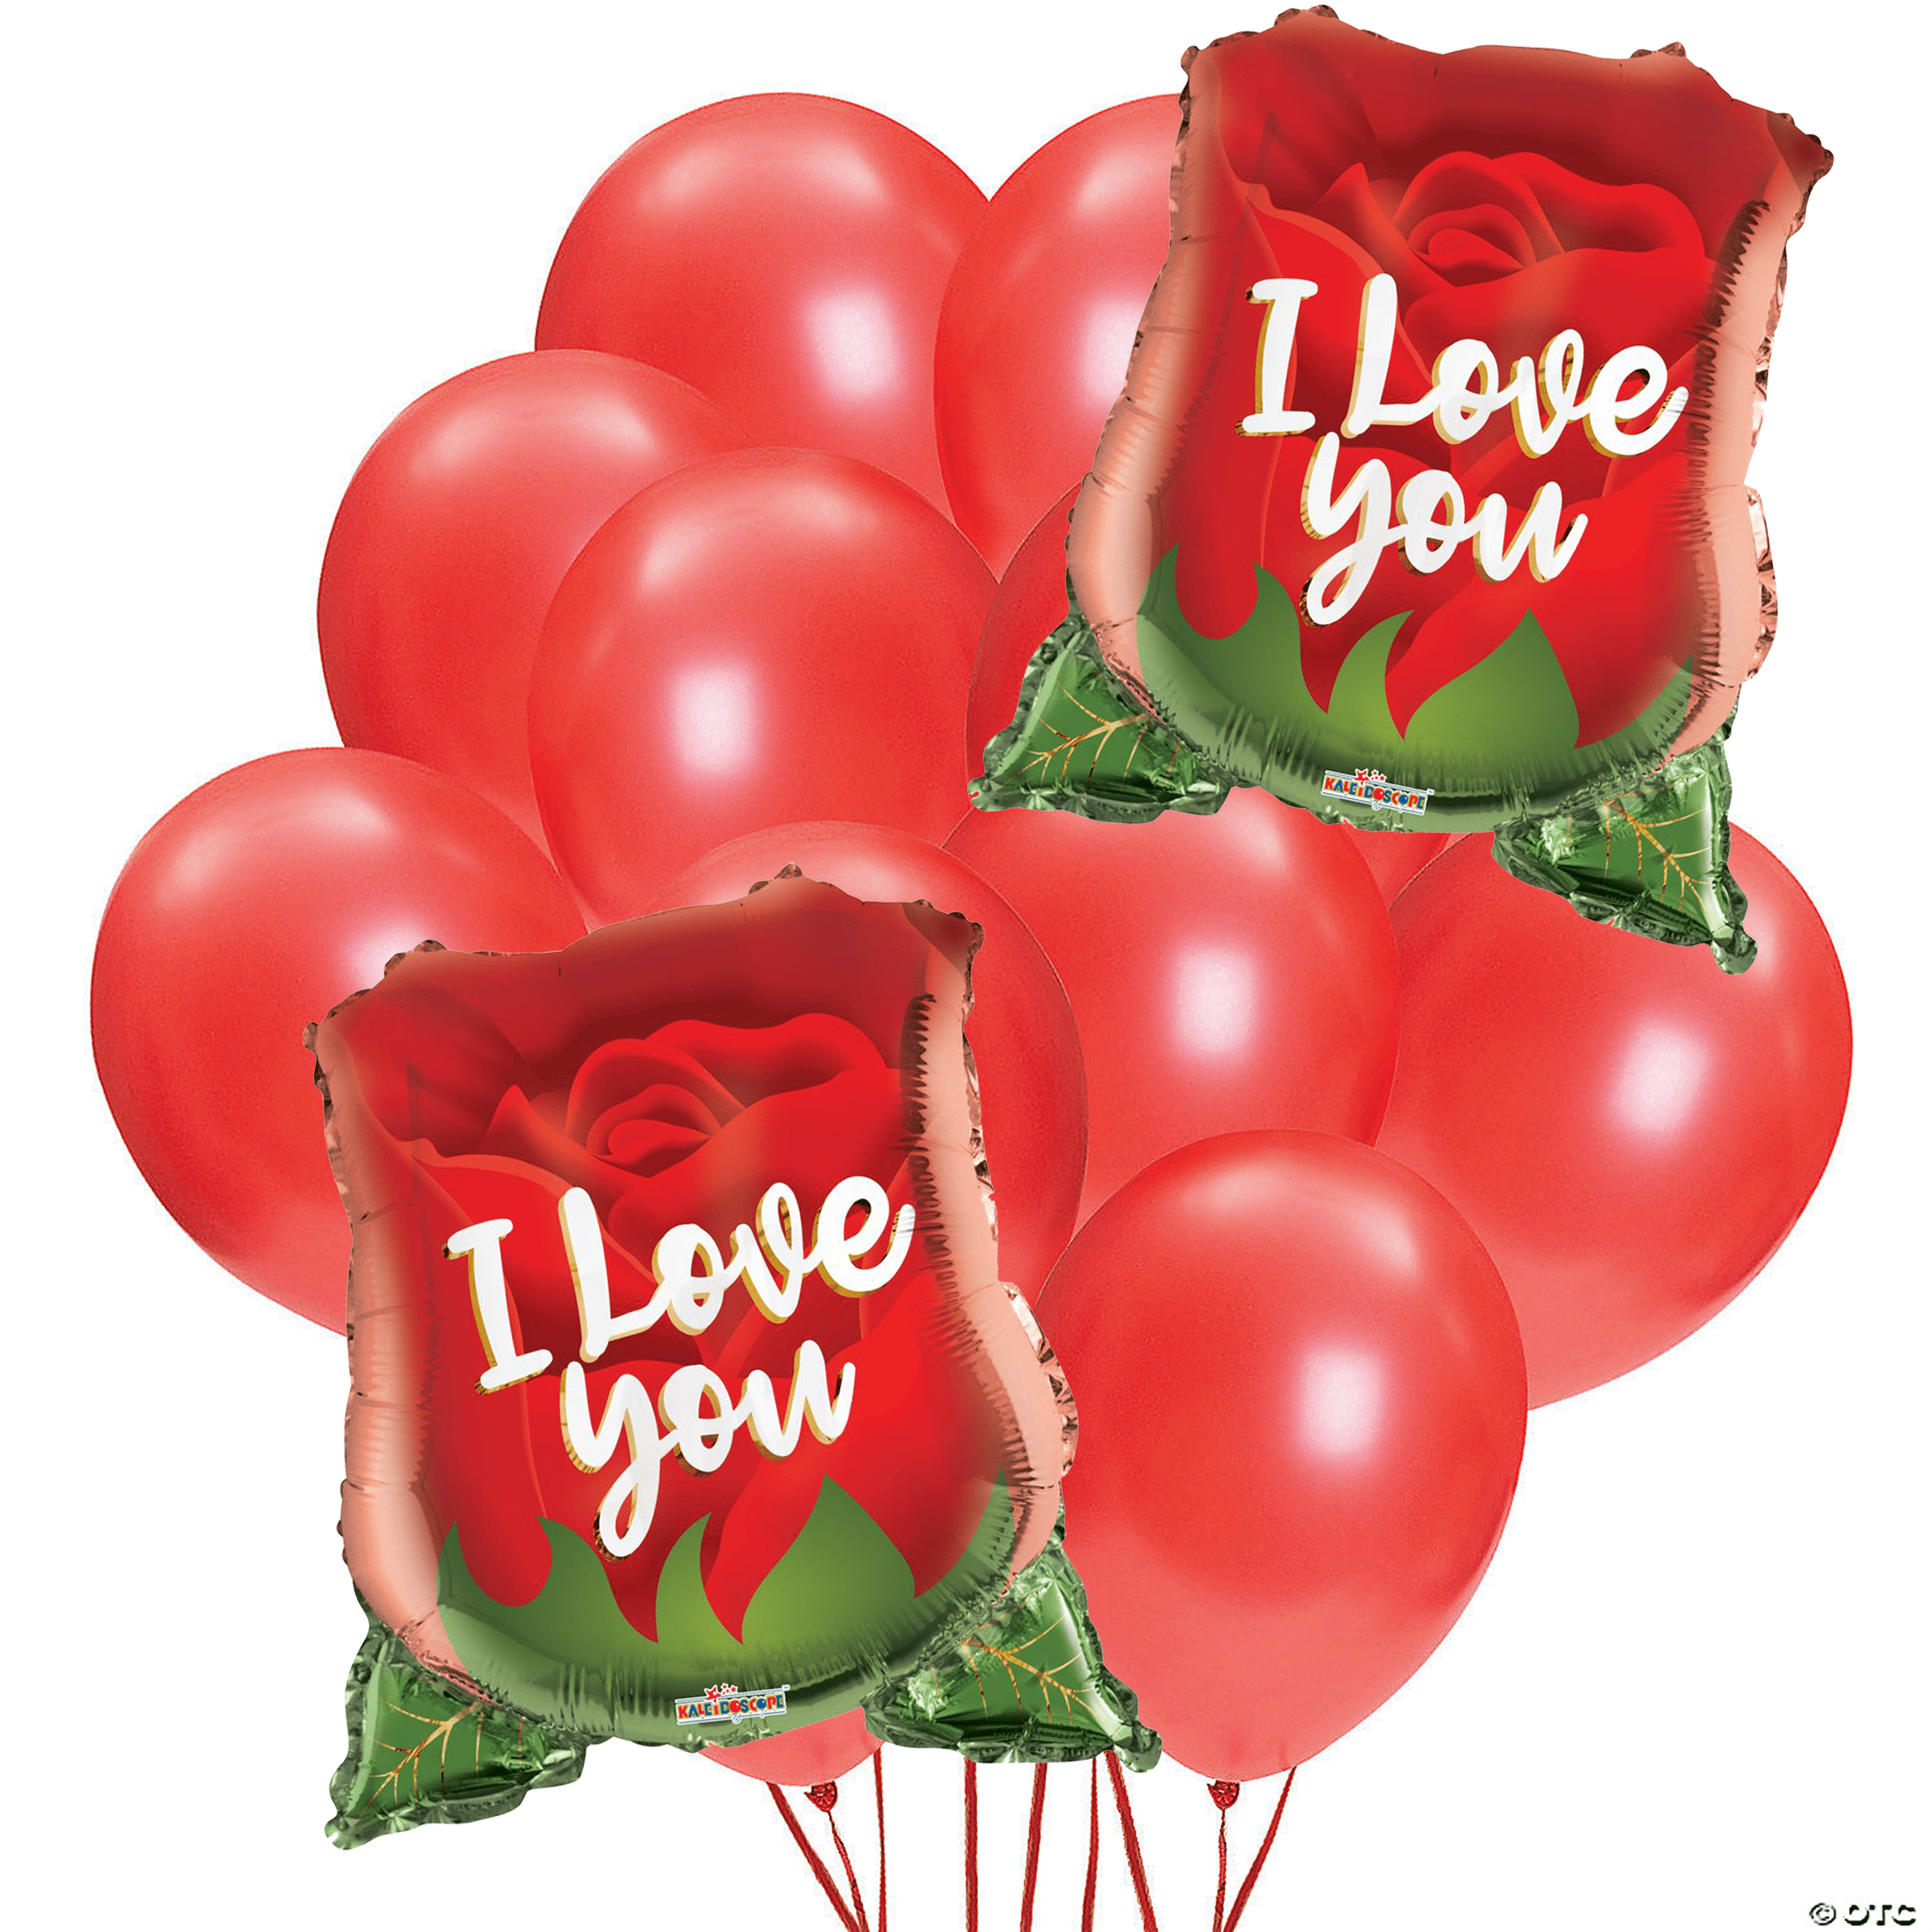 i love you balloons, standard shape, valentines day, celebration, romance, cute decorations, cute wall decorations, family time, decoration, party kits, love decoration - Walmart.com